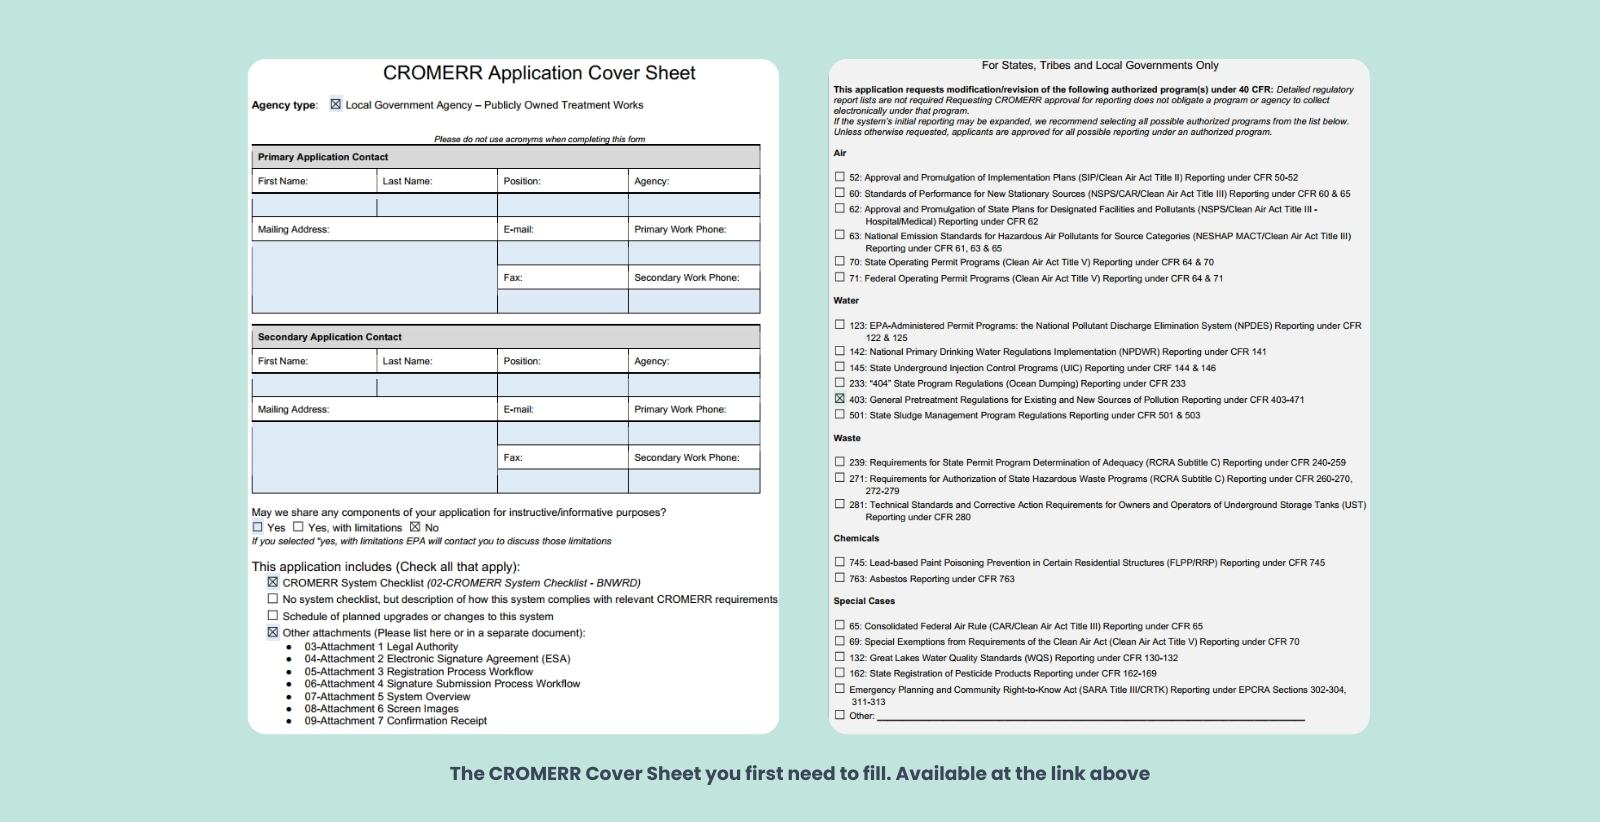 CROMERR Application Cover Sheet